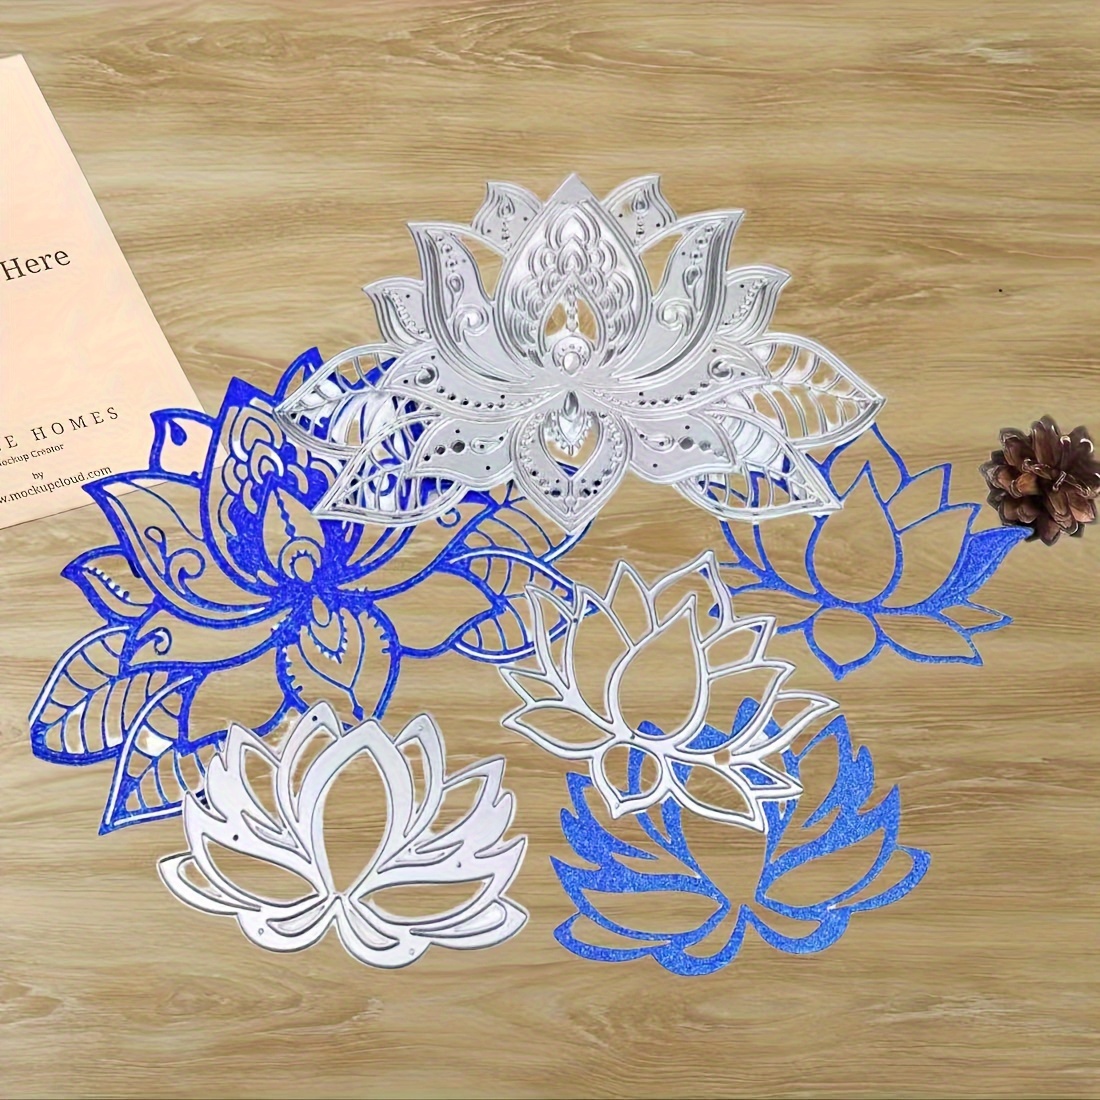 

3-piece Lotus Flower Metal Cutting Dies Set, Carbon Steel Embossing Stencils For Diy Scrapbooking & Card Making, Silver - Includes 1 U.s. Knife Mold